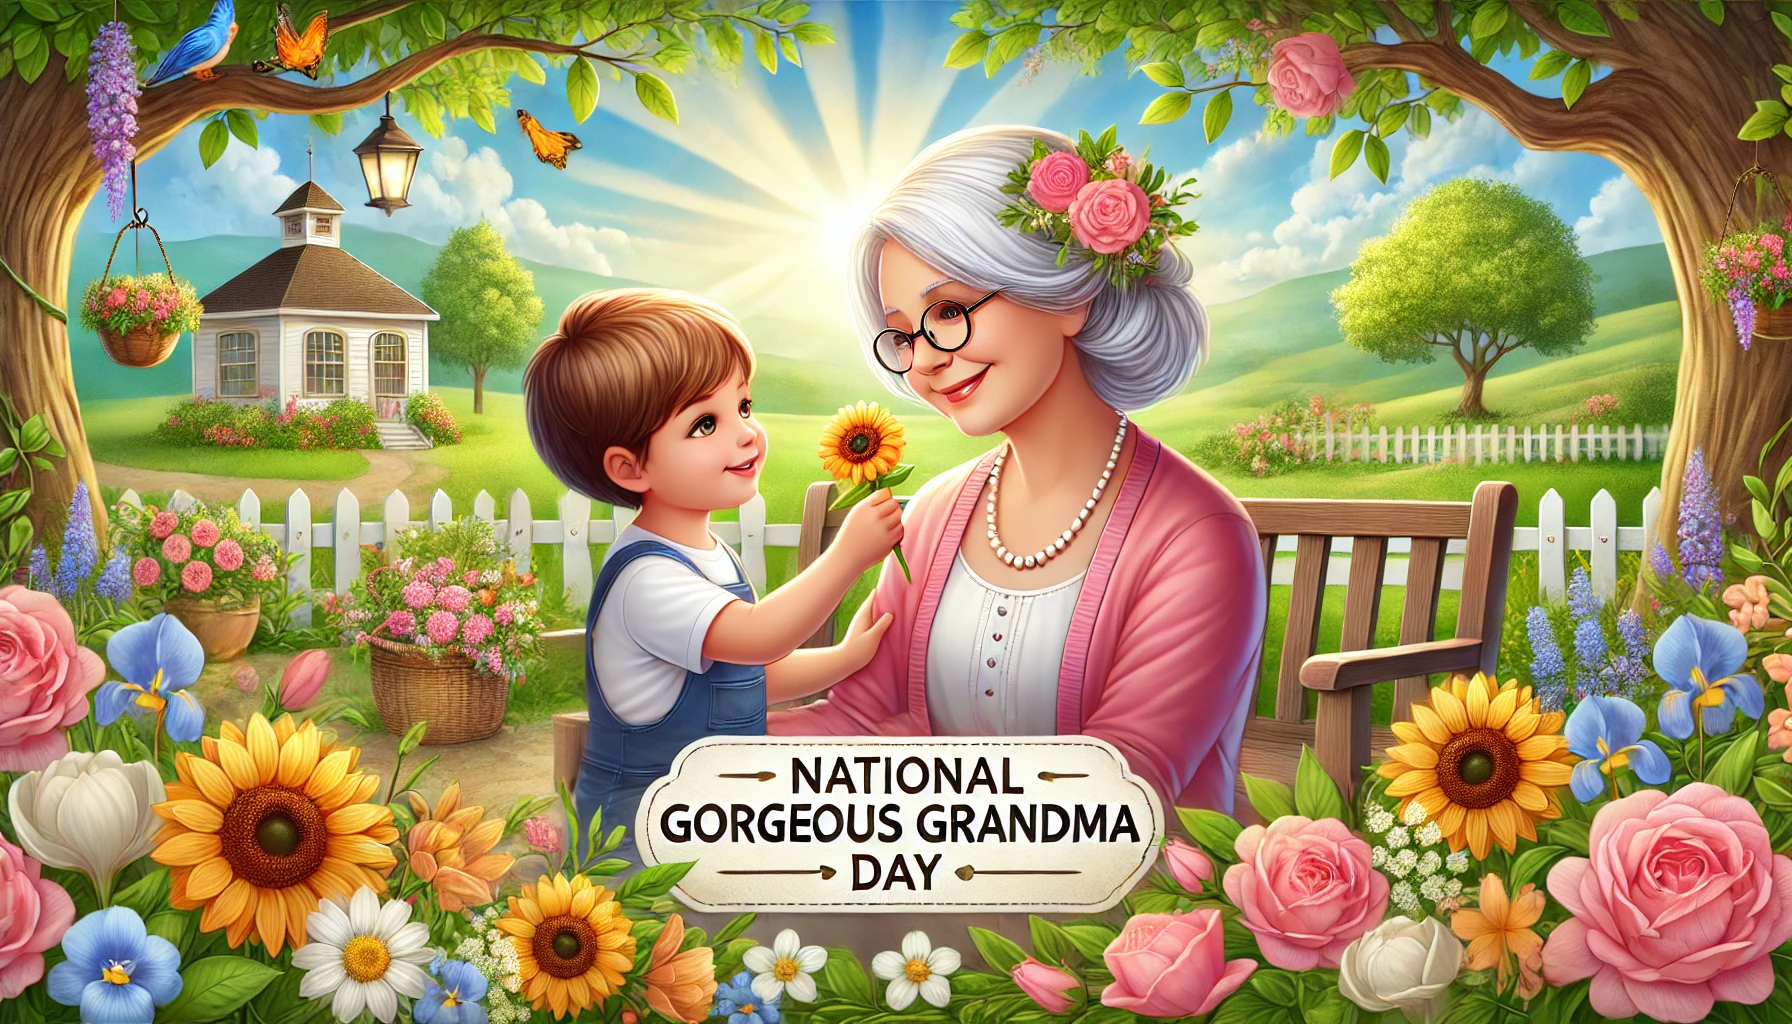 National Gorgeous Grandma Day